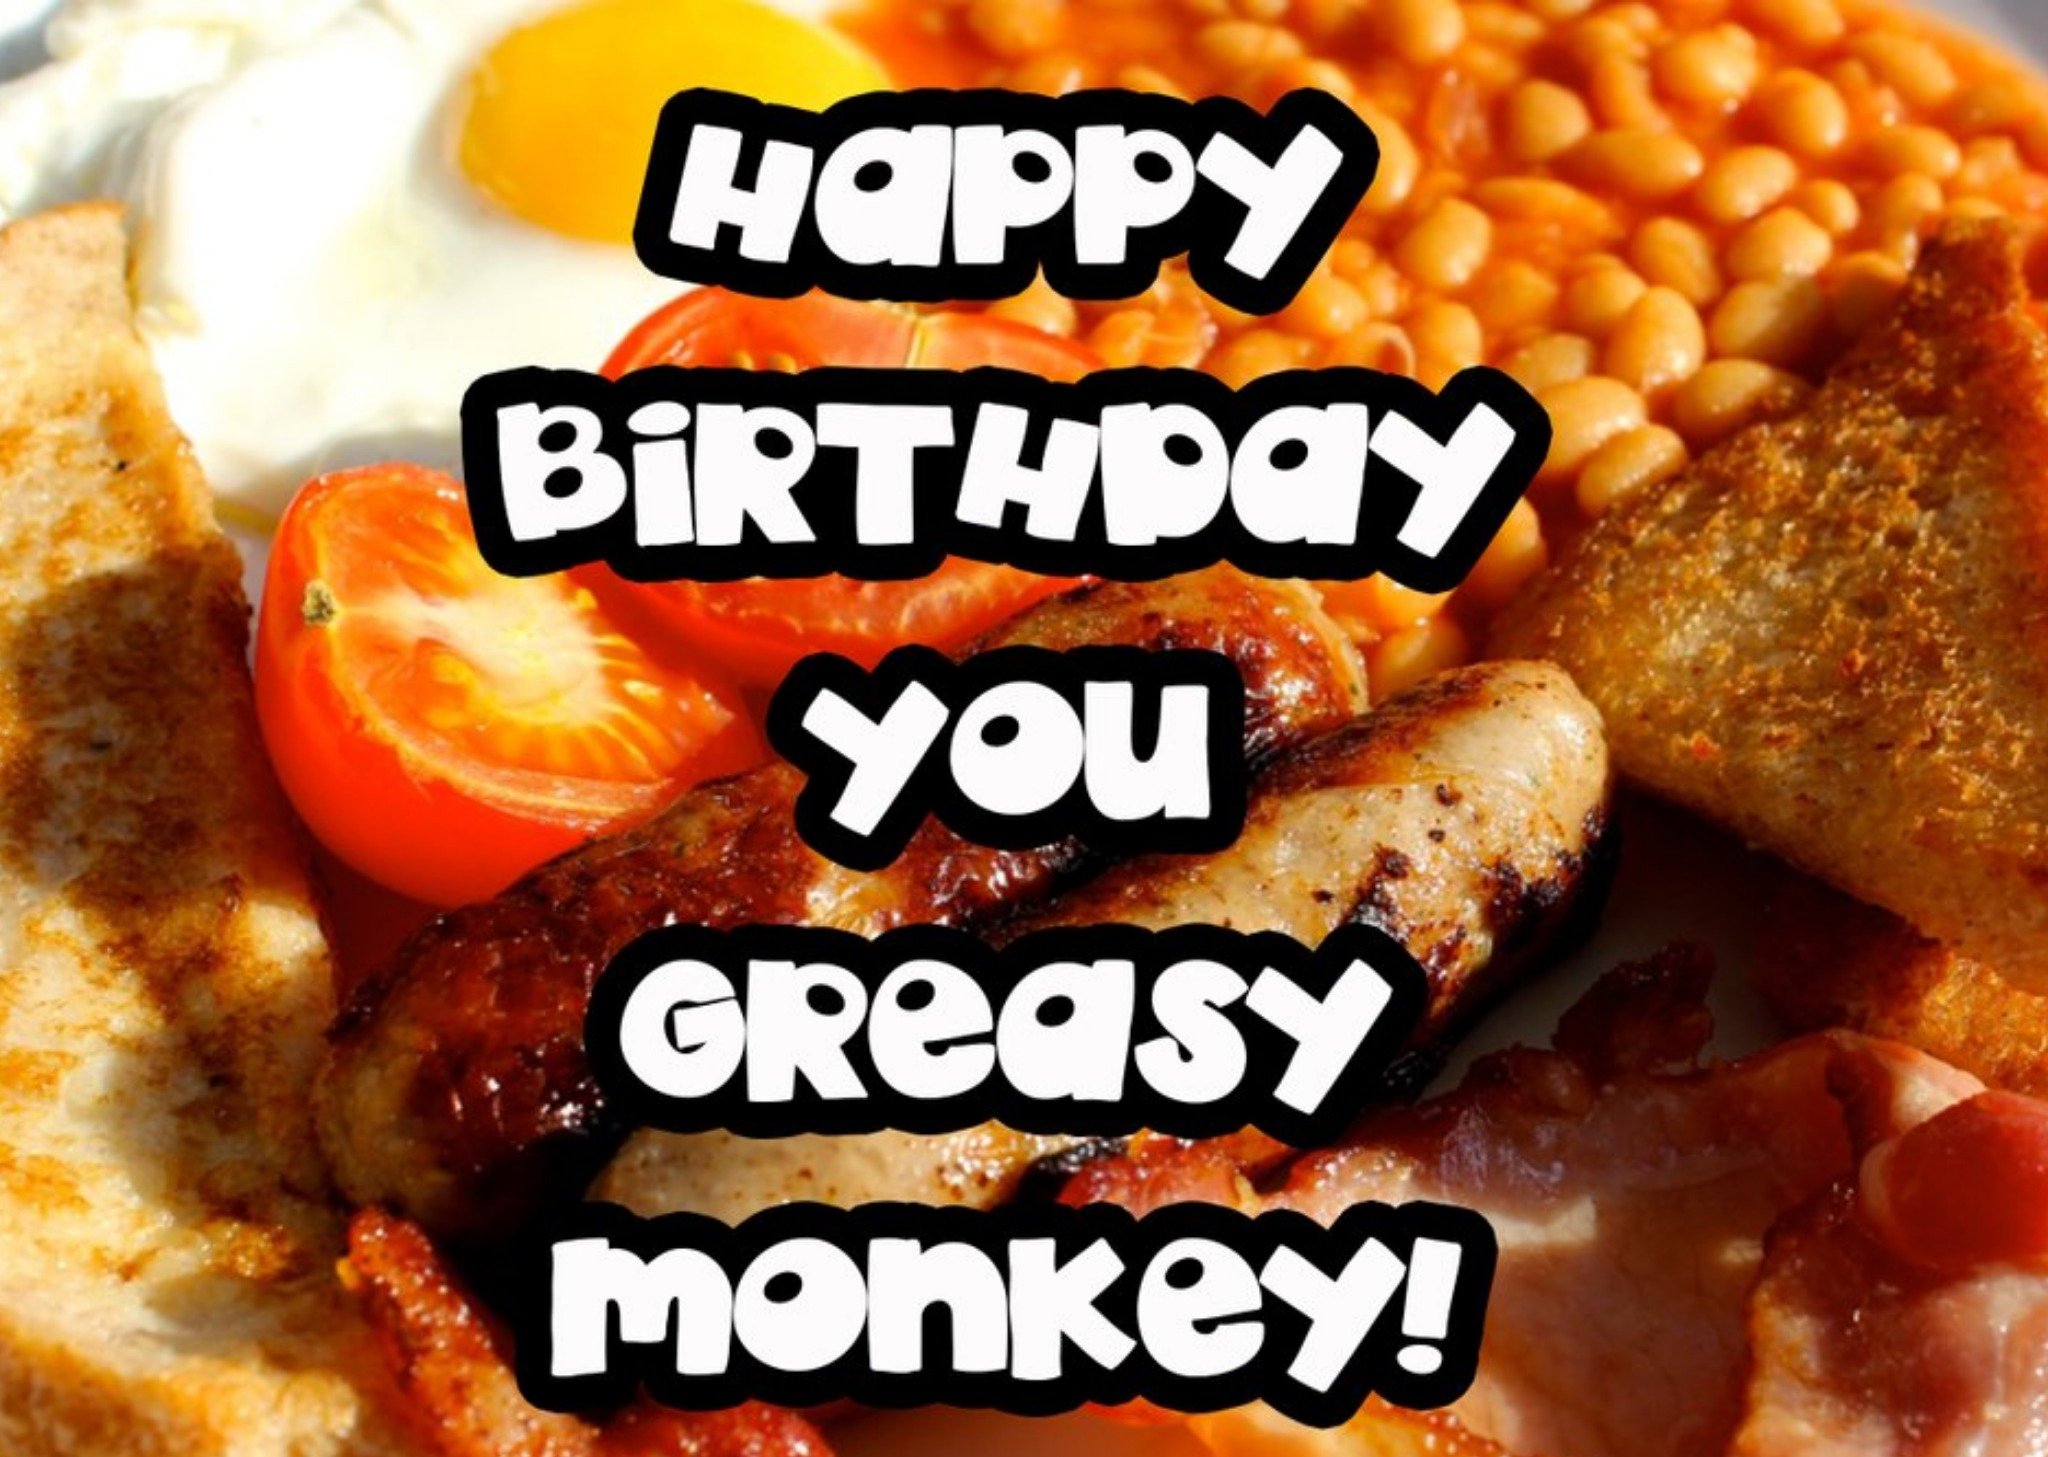 Moonpig Full English You Greasy Monkey Personalised Happy Birthday Card Ecard